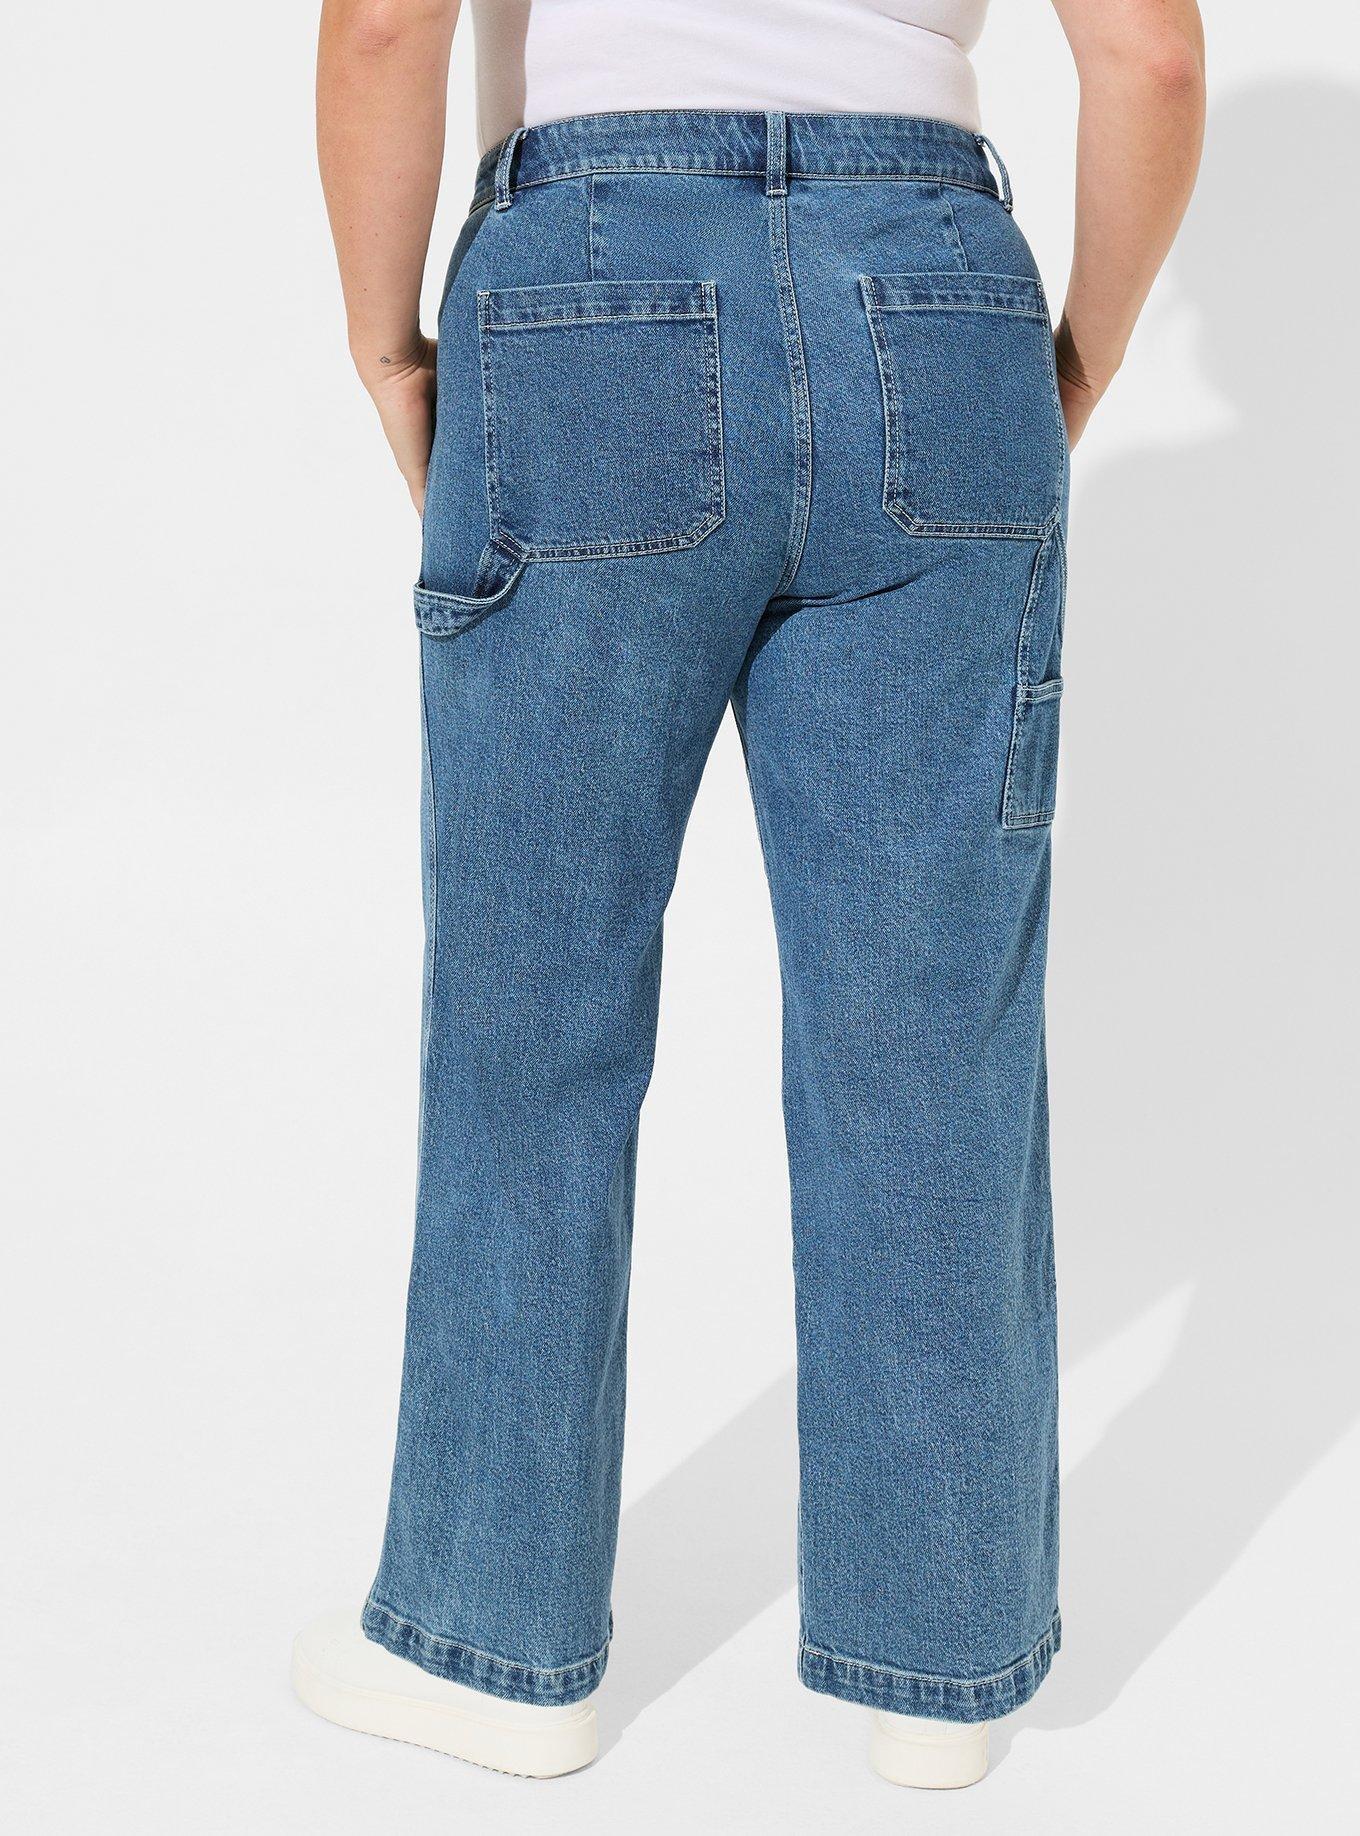 Luxie Vintage 90s Blue Wrangler Jeans